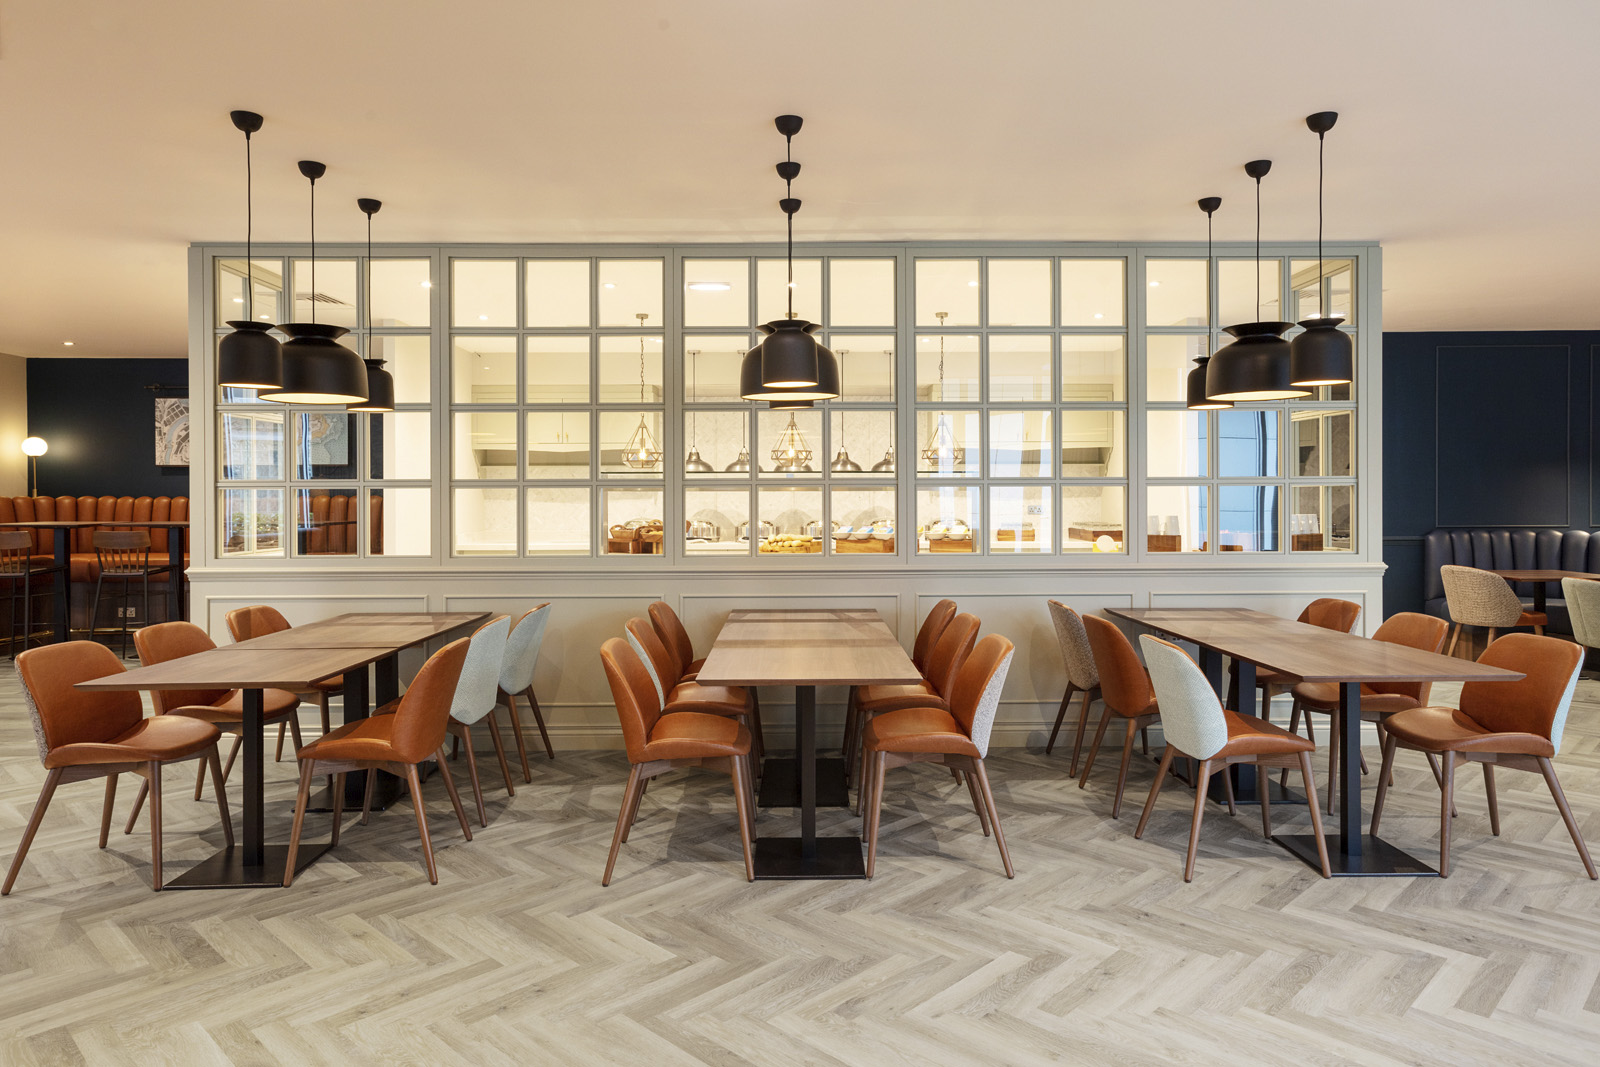 Karndean Design Contemporary Flooring For Hotel Social Space